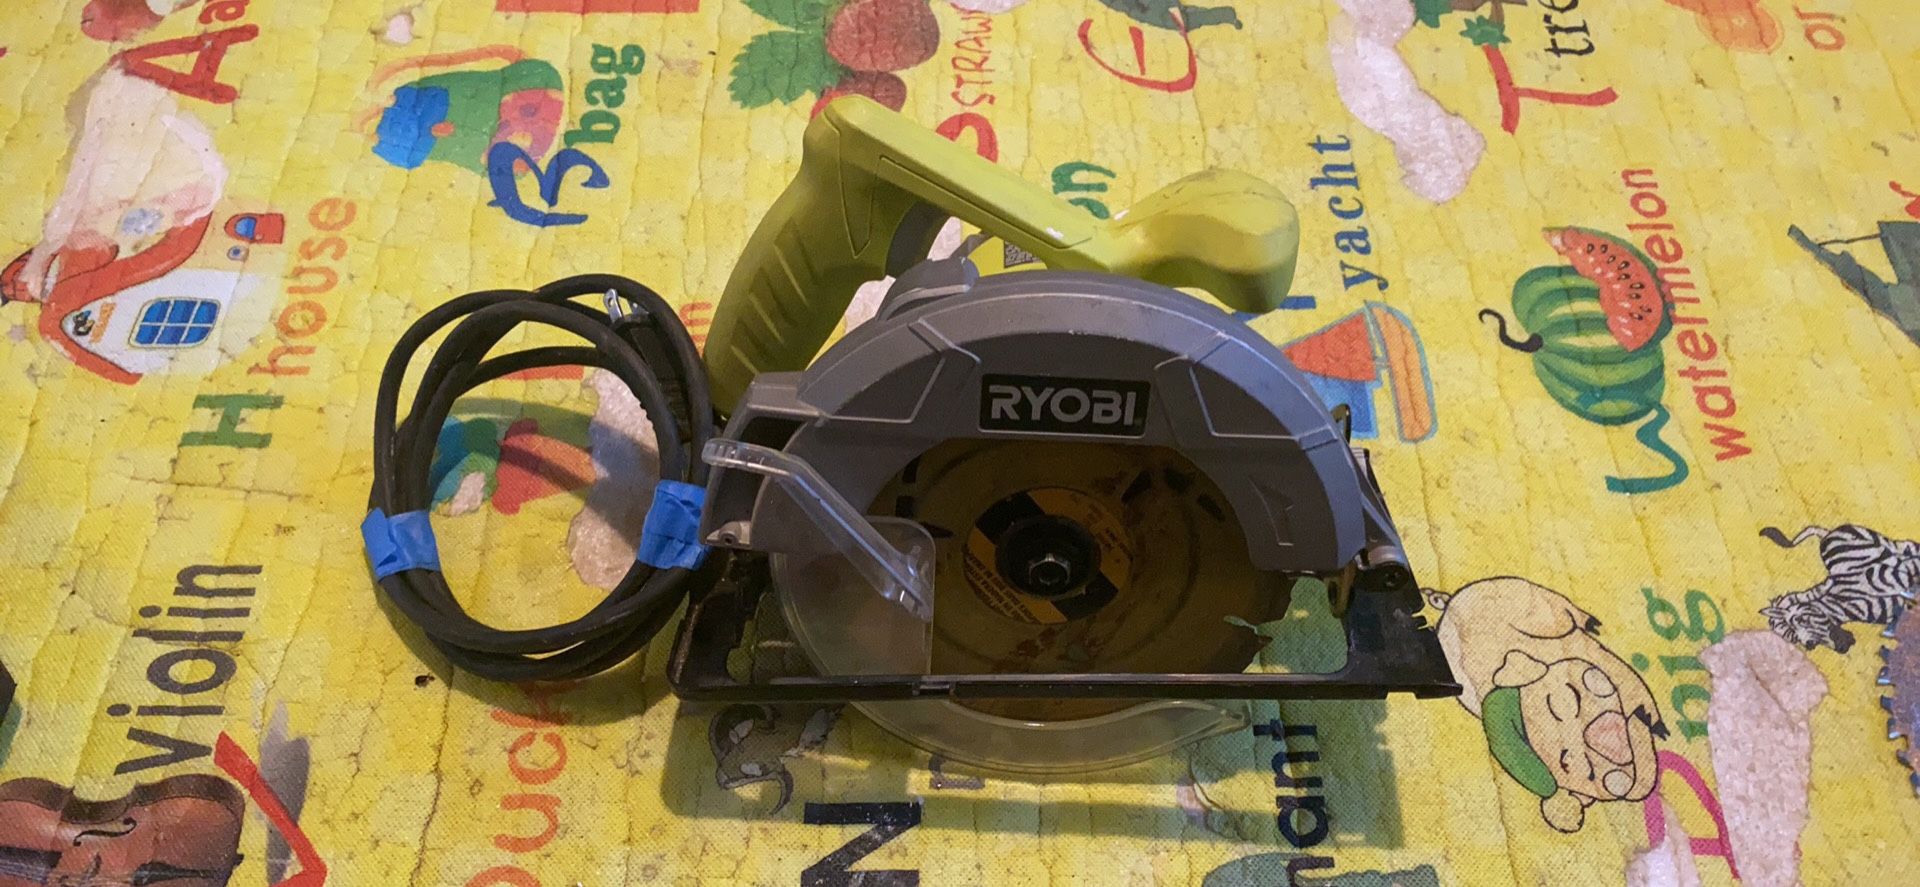 Ryobi circular saw